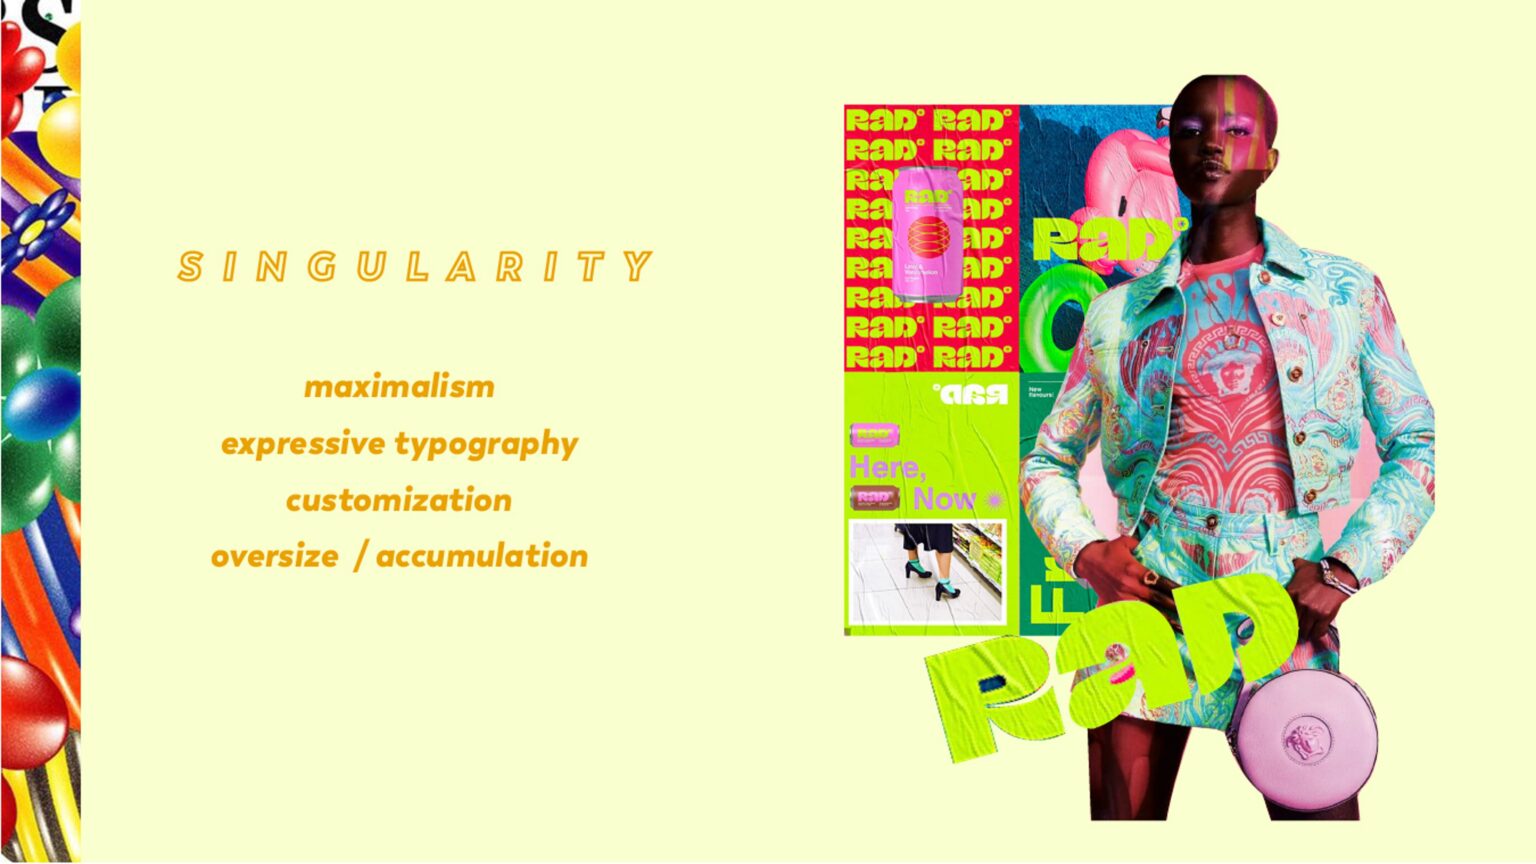 Singularity trends: maximalism, expressive typography, customization, oversize, accumulation